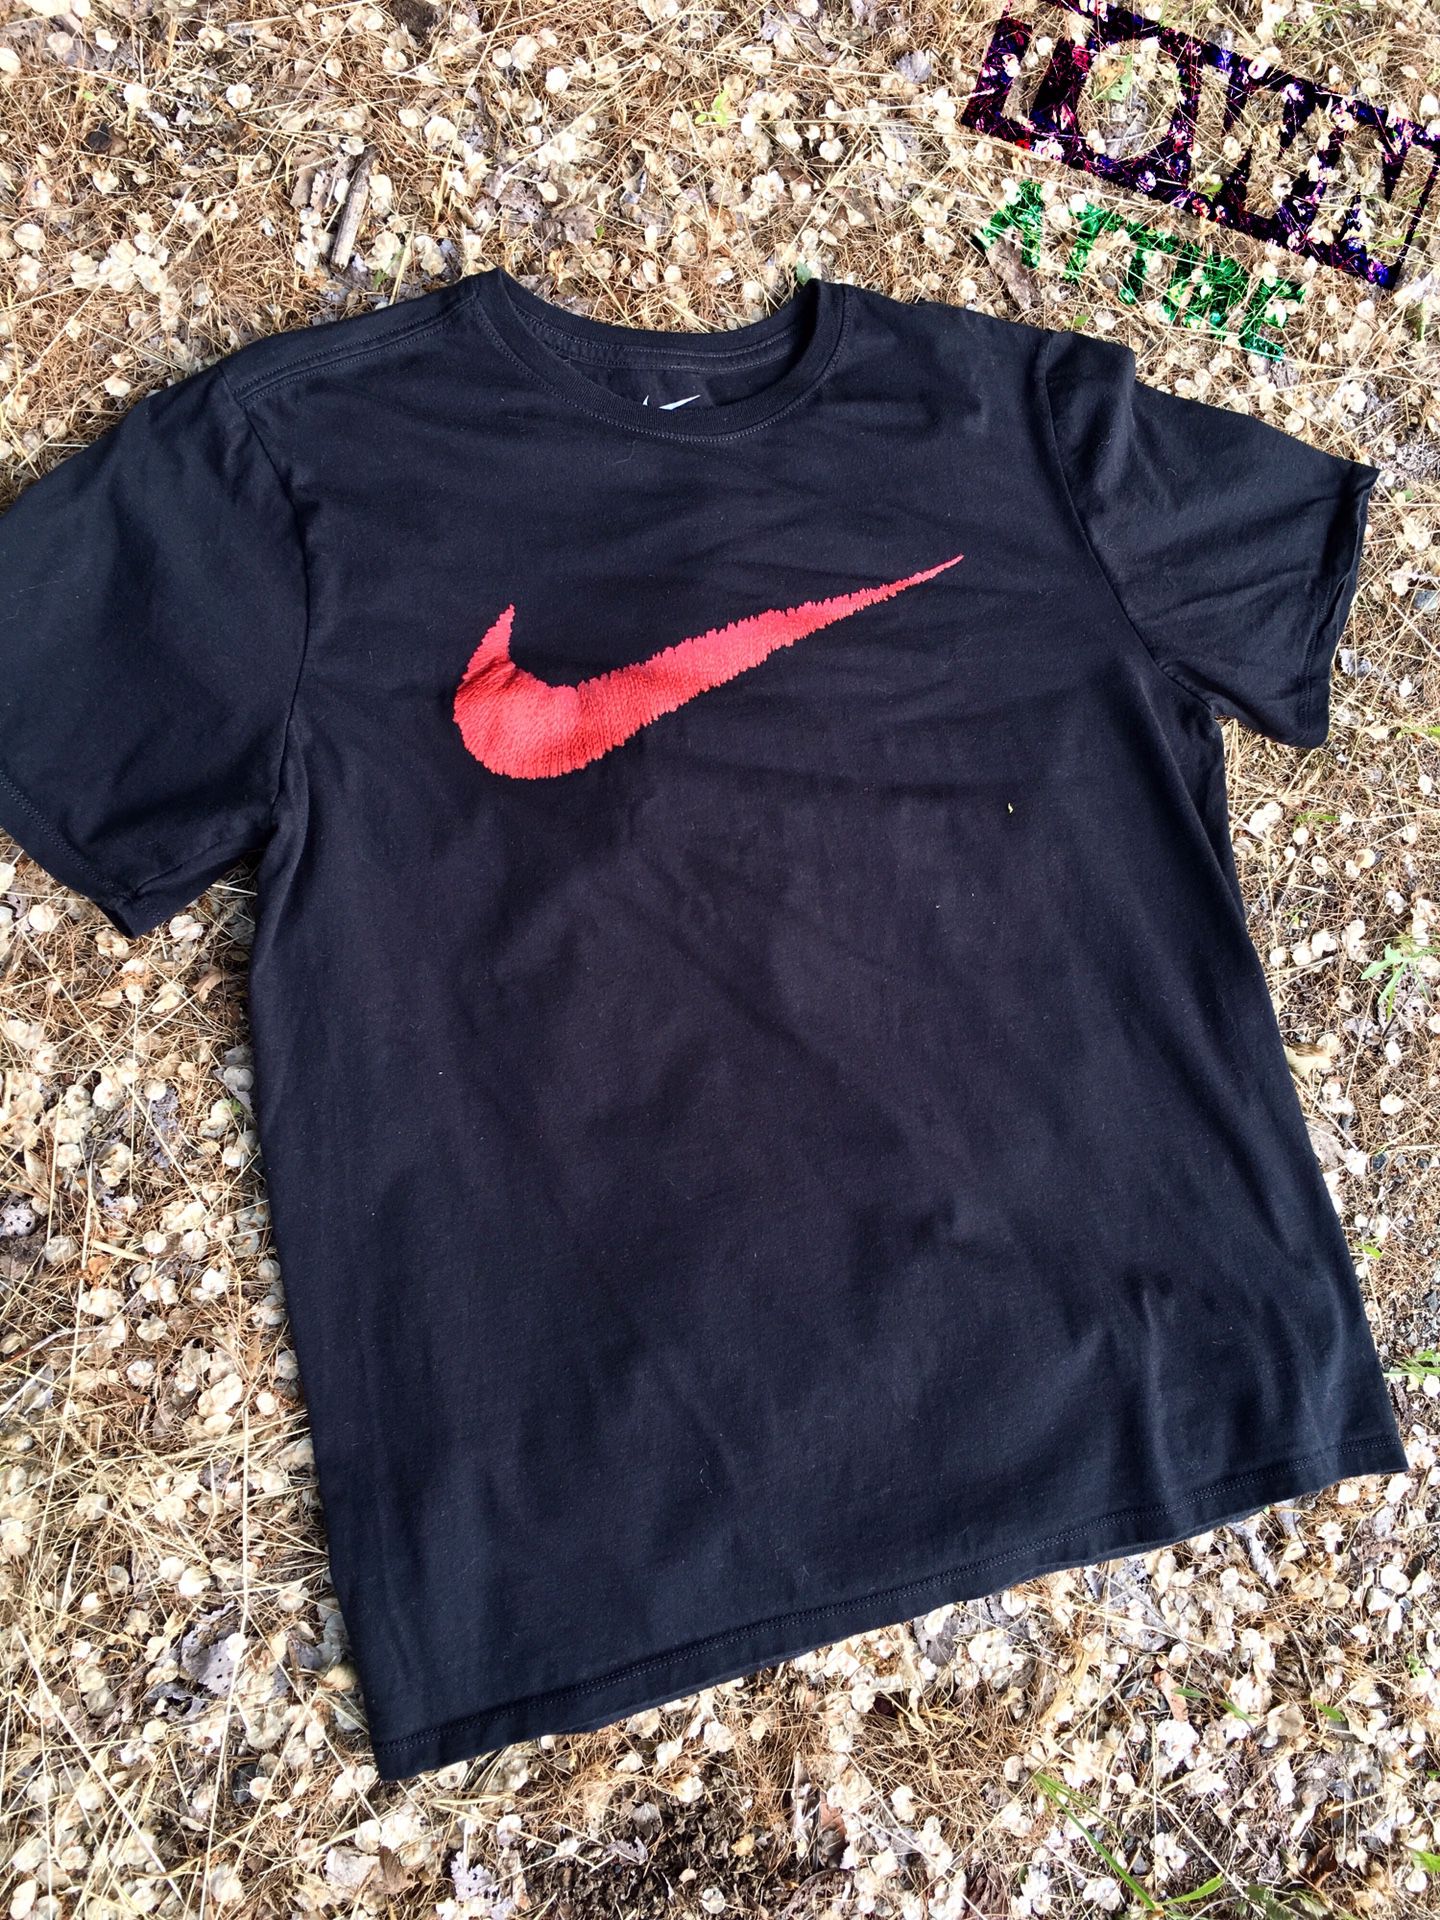 Men’s Nike shirt size large